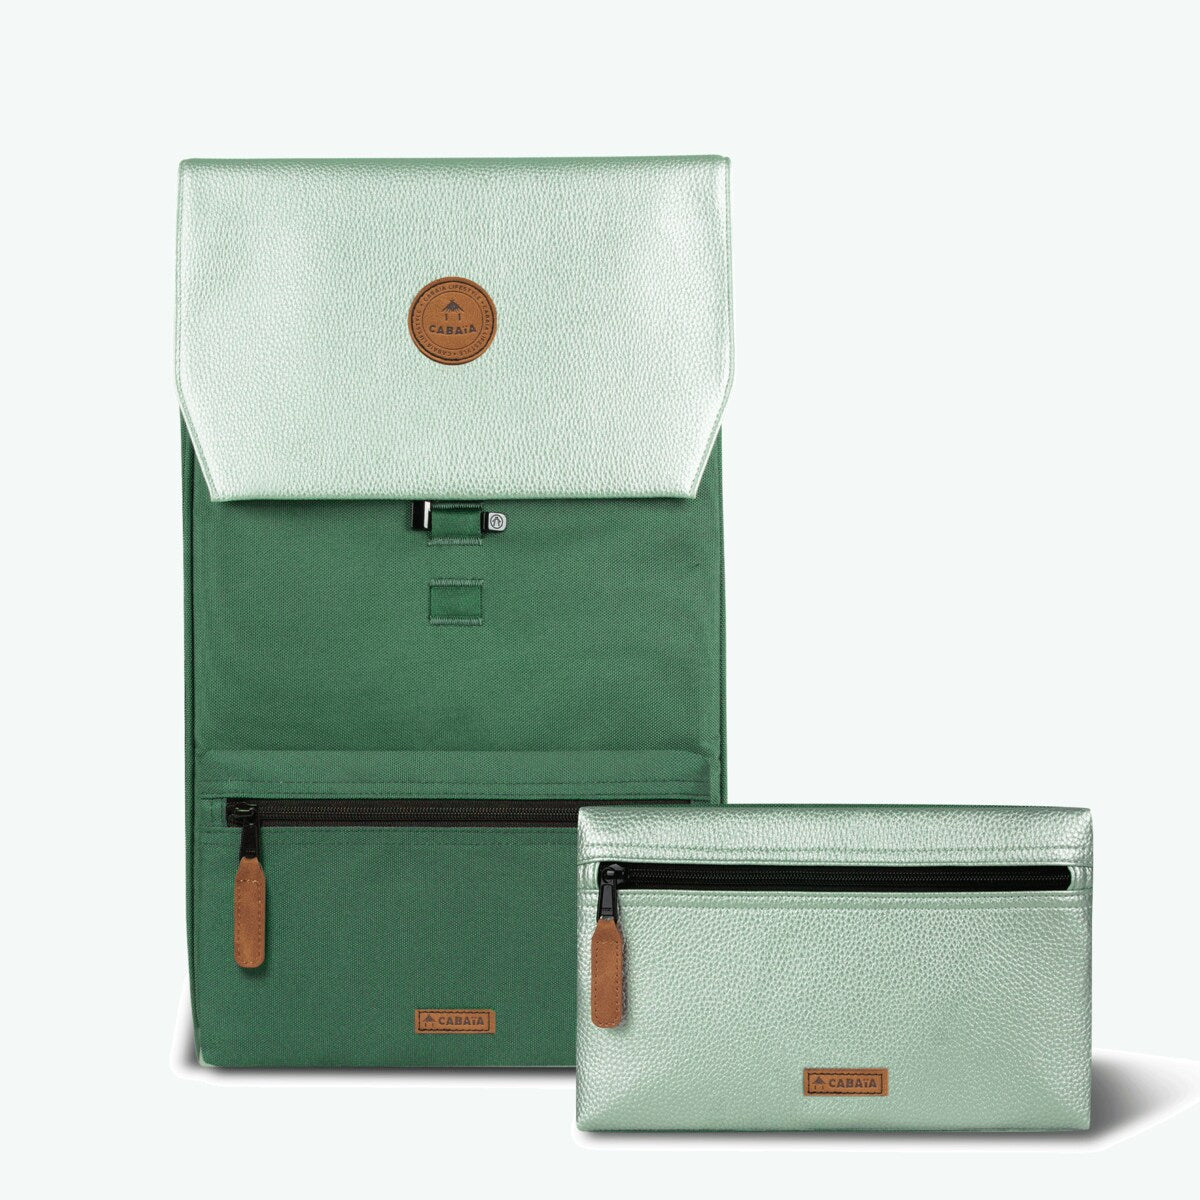 city-green-medium-backpack